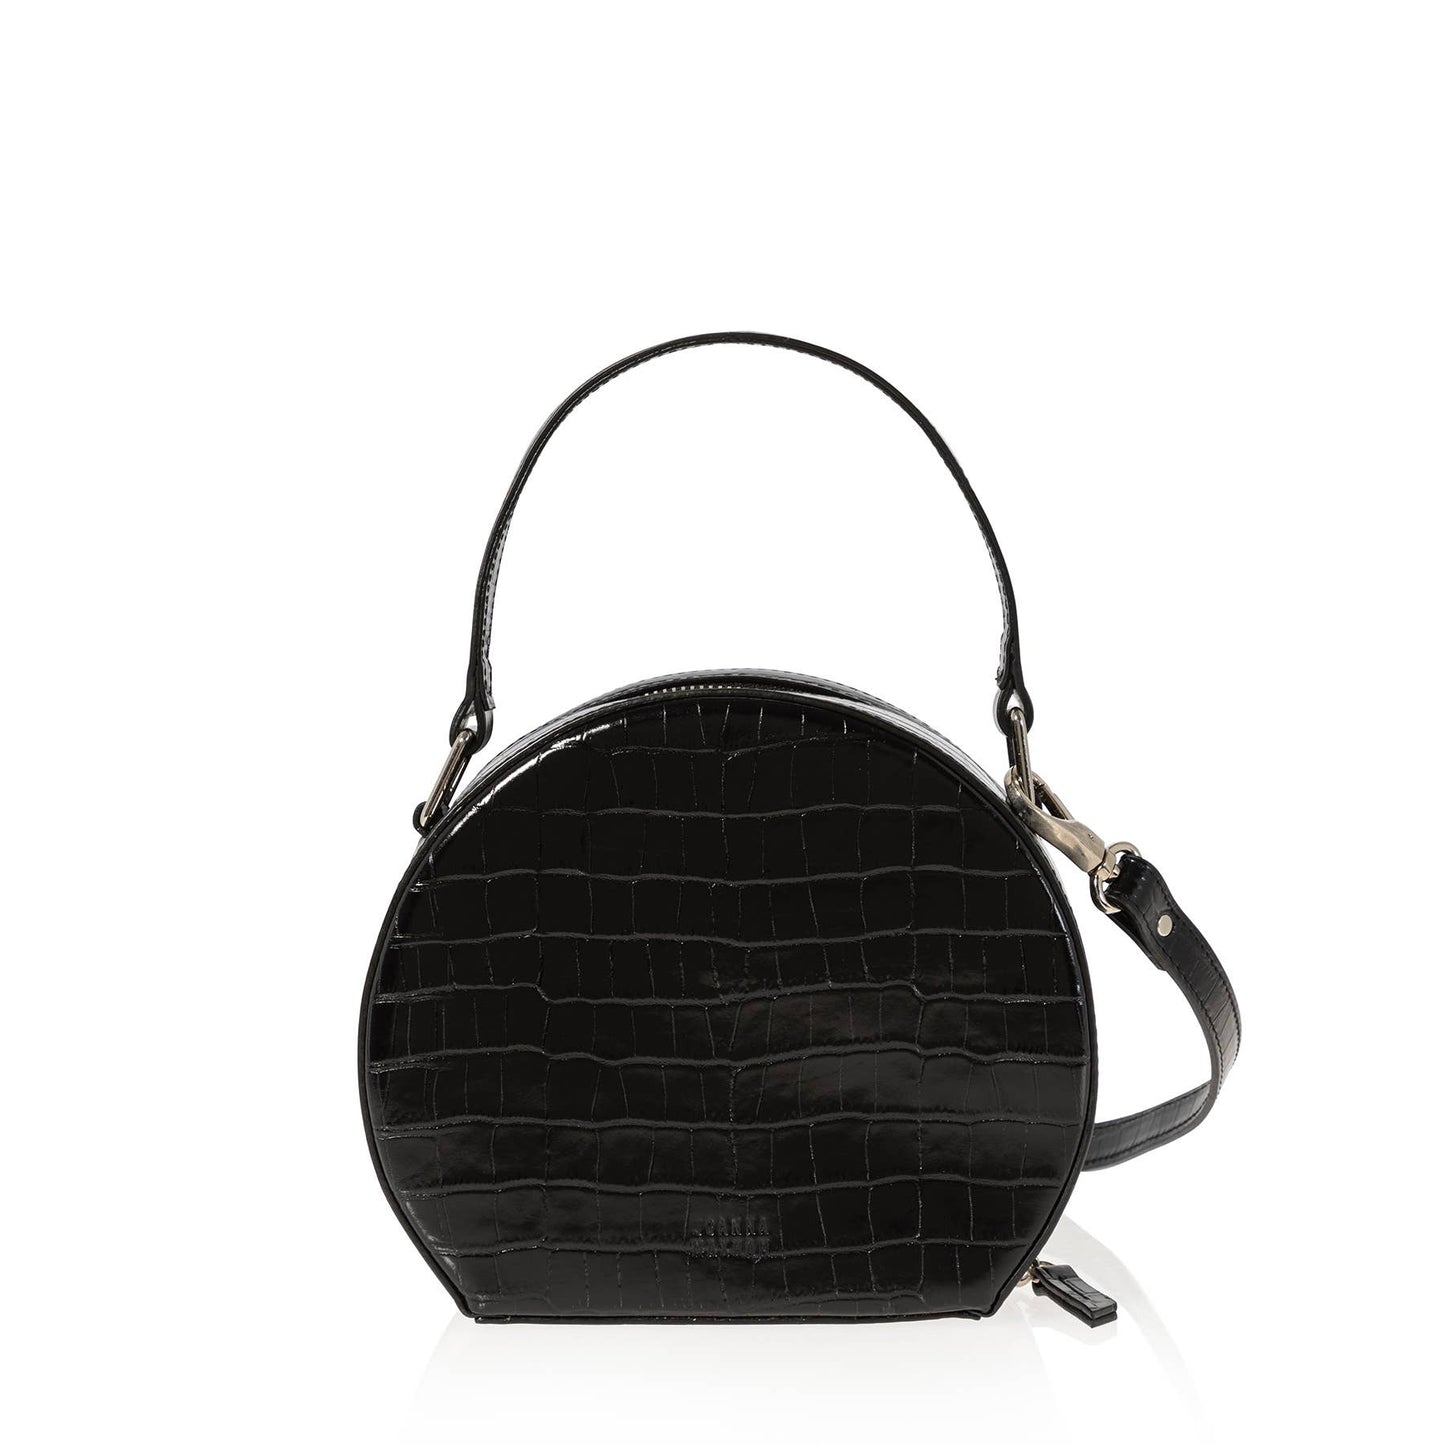 Joanna Maxham: Luxury Designer Handbags - The Hatter Bag  (Black Croco)